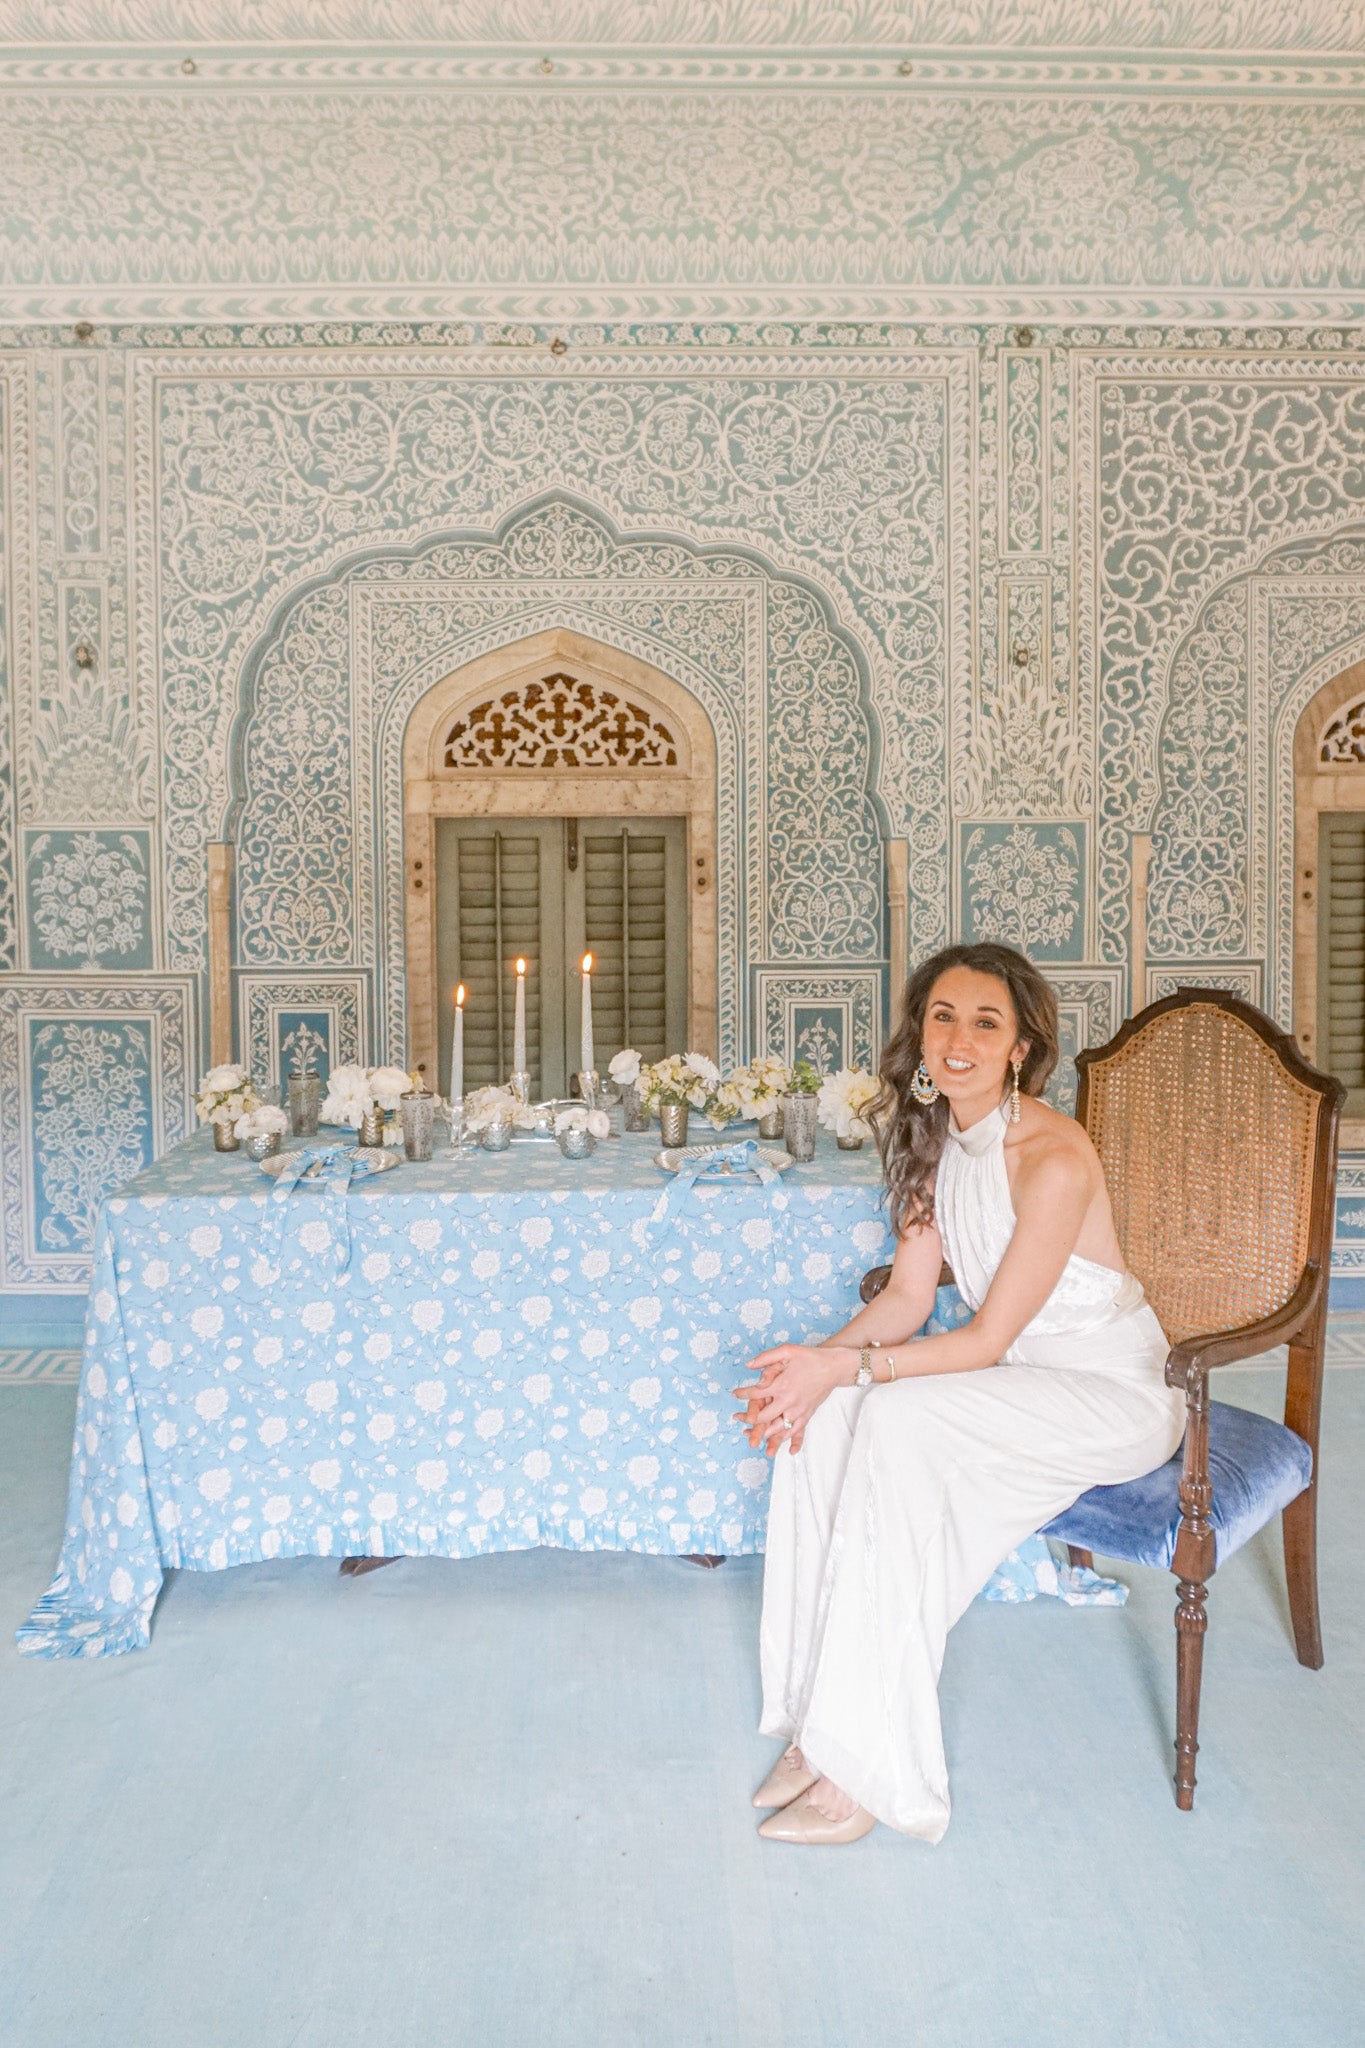 Rosanna Falconer next to the Peony Bloom tablescape at Samode Palace blue room